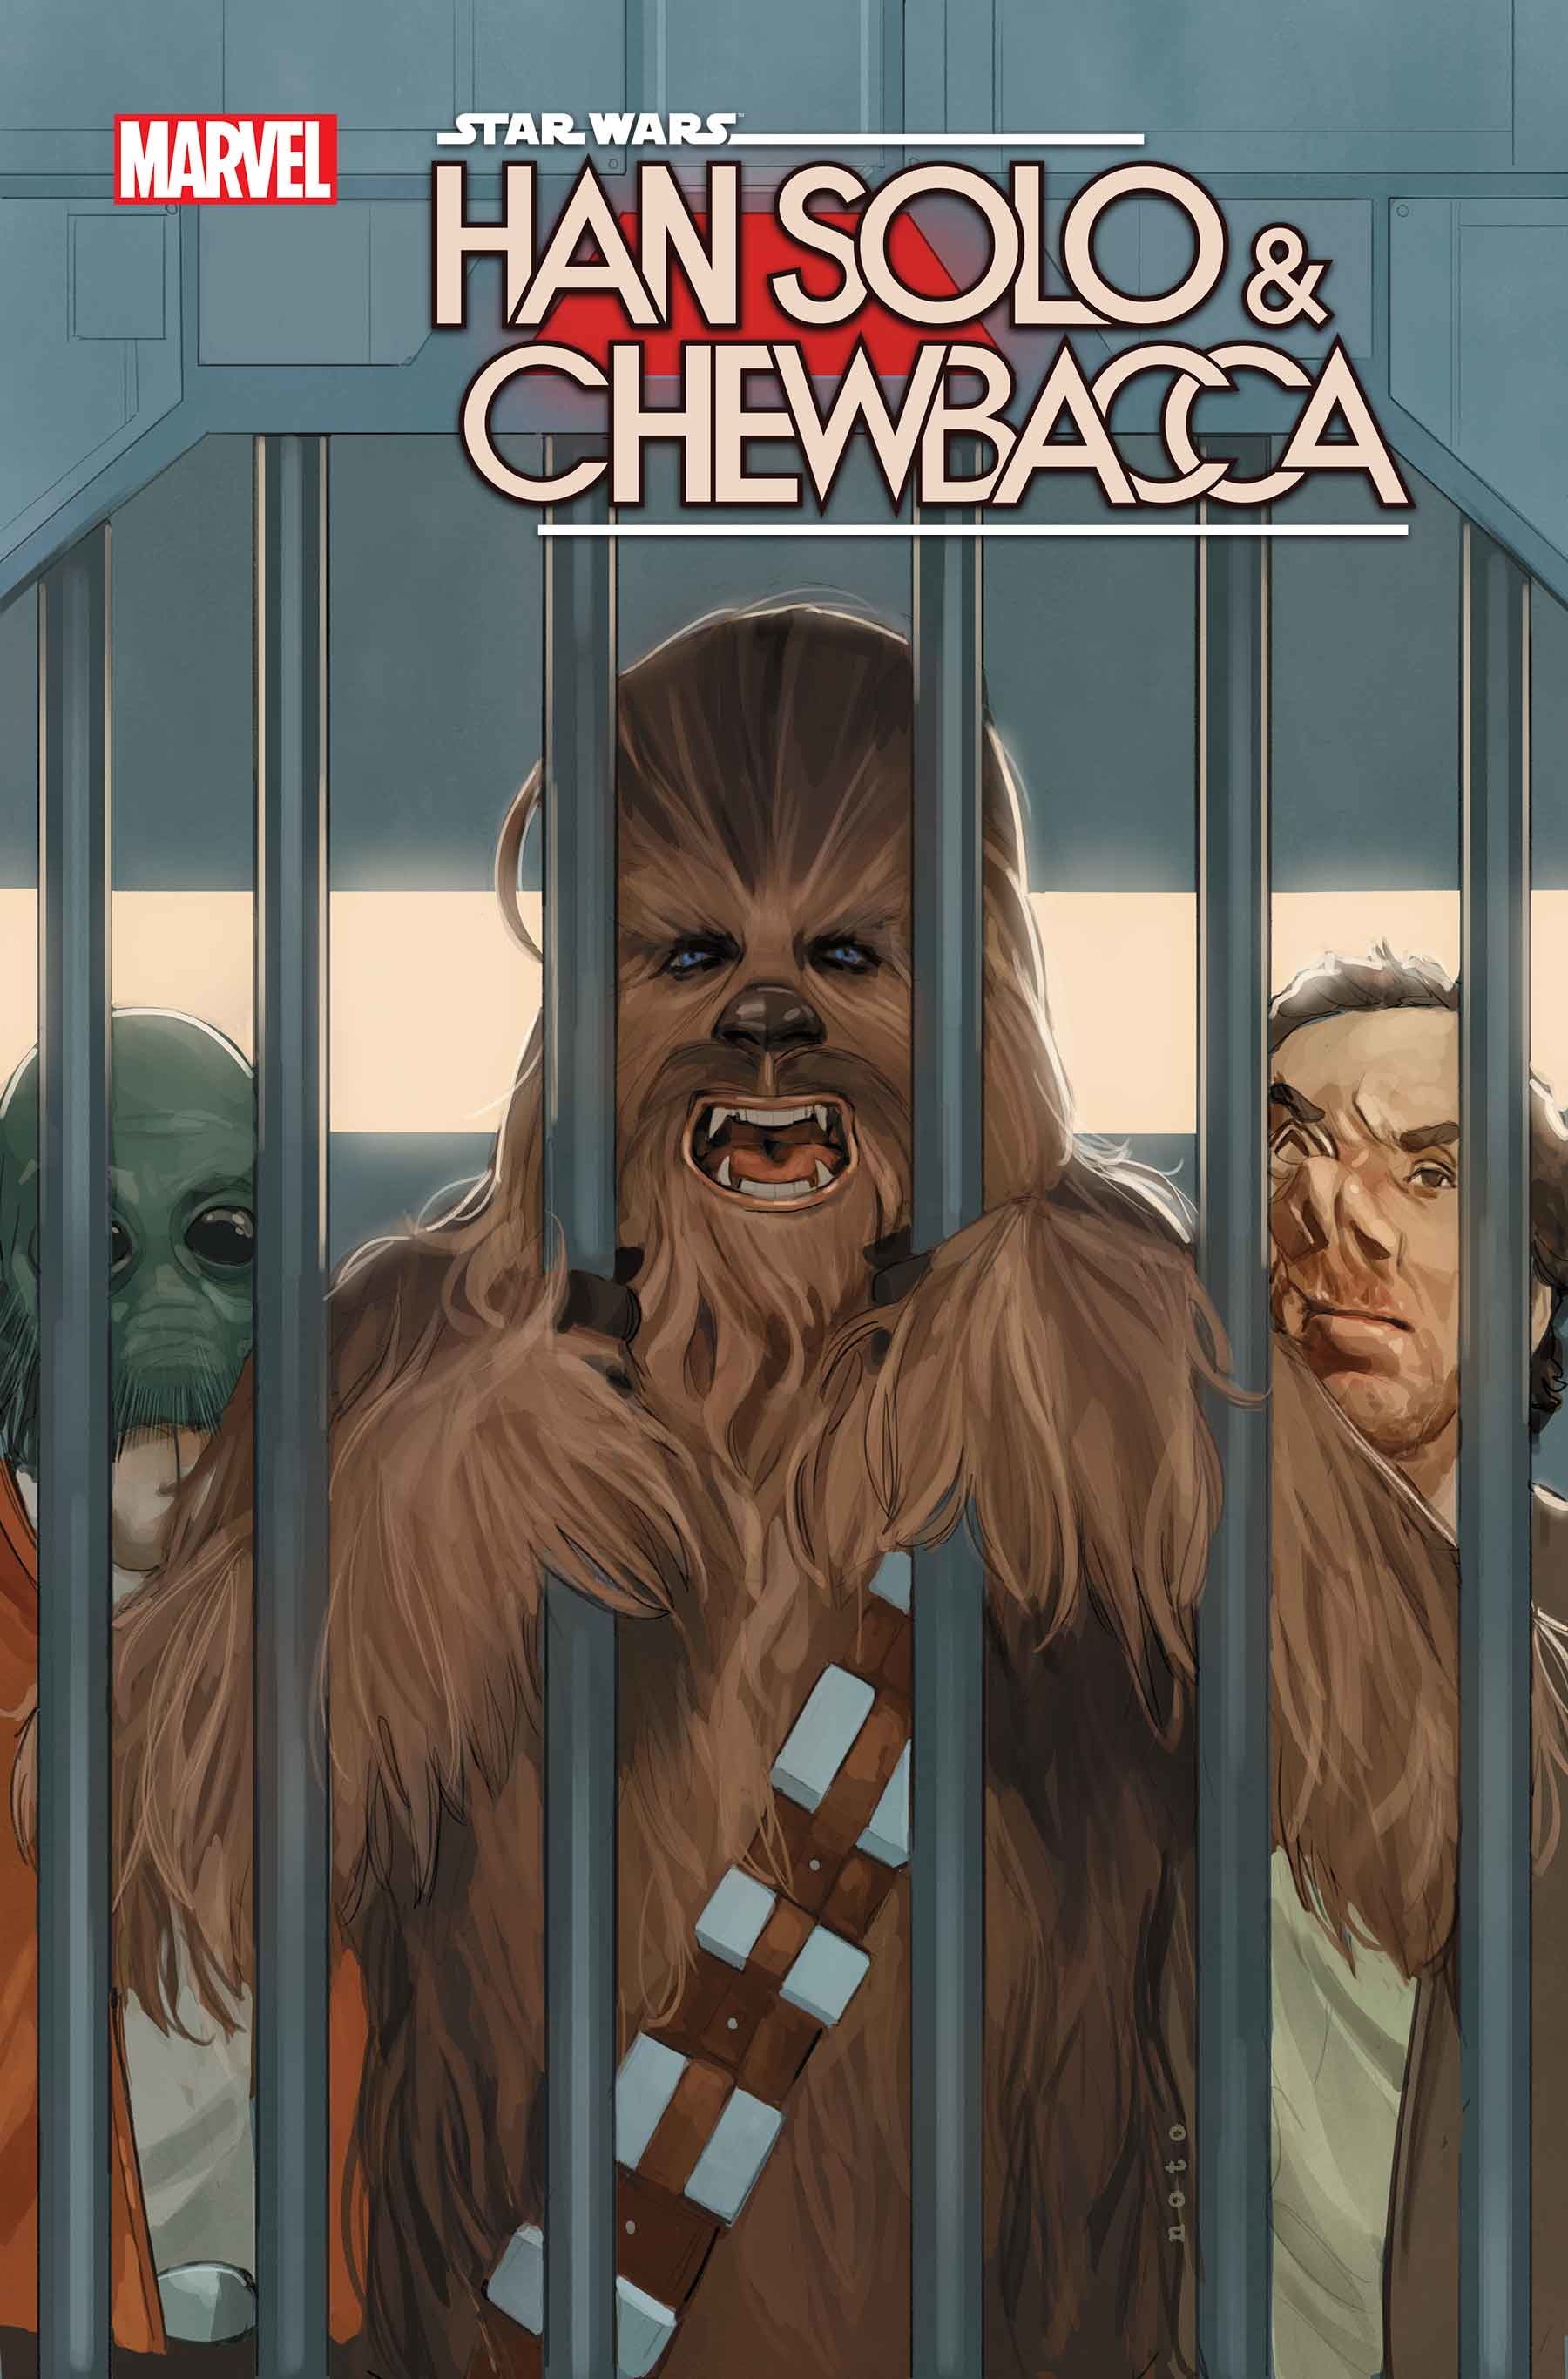 Star Wars Han Solo & Chewbacca #6